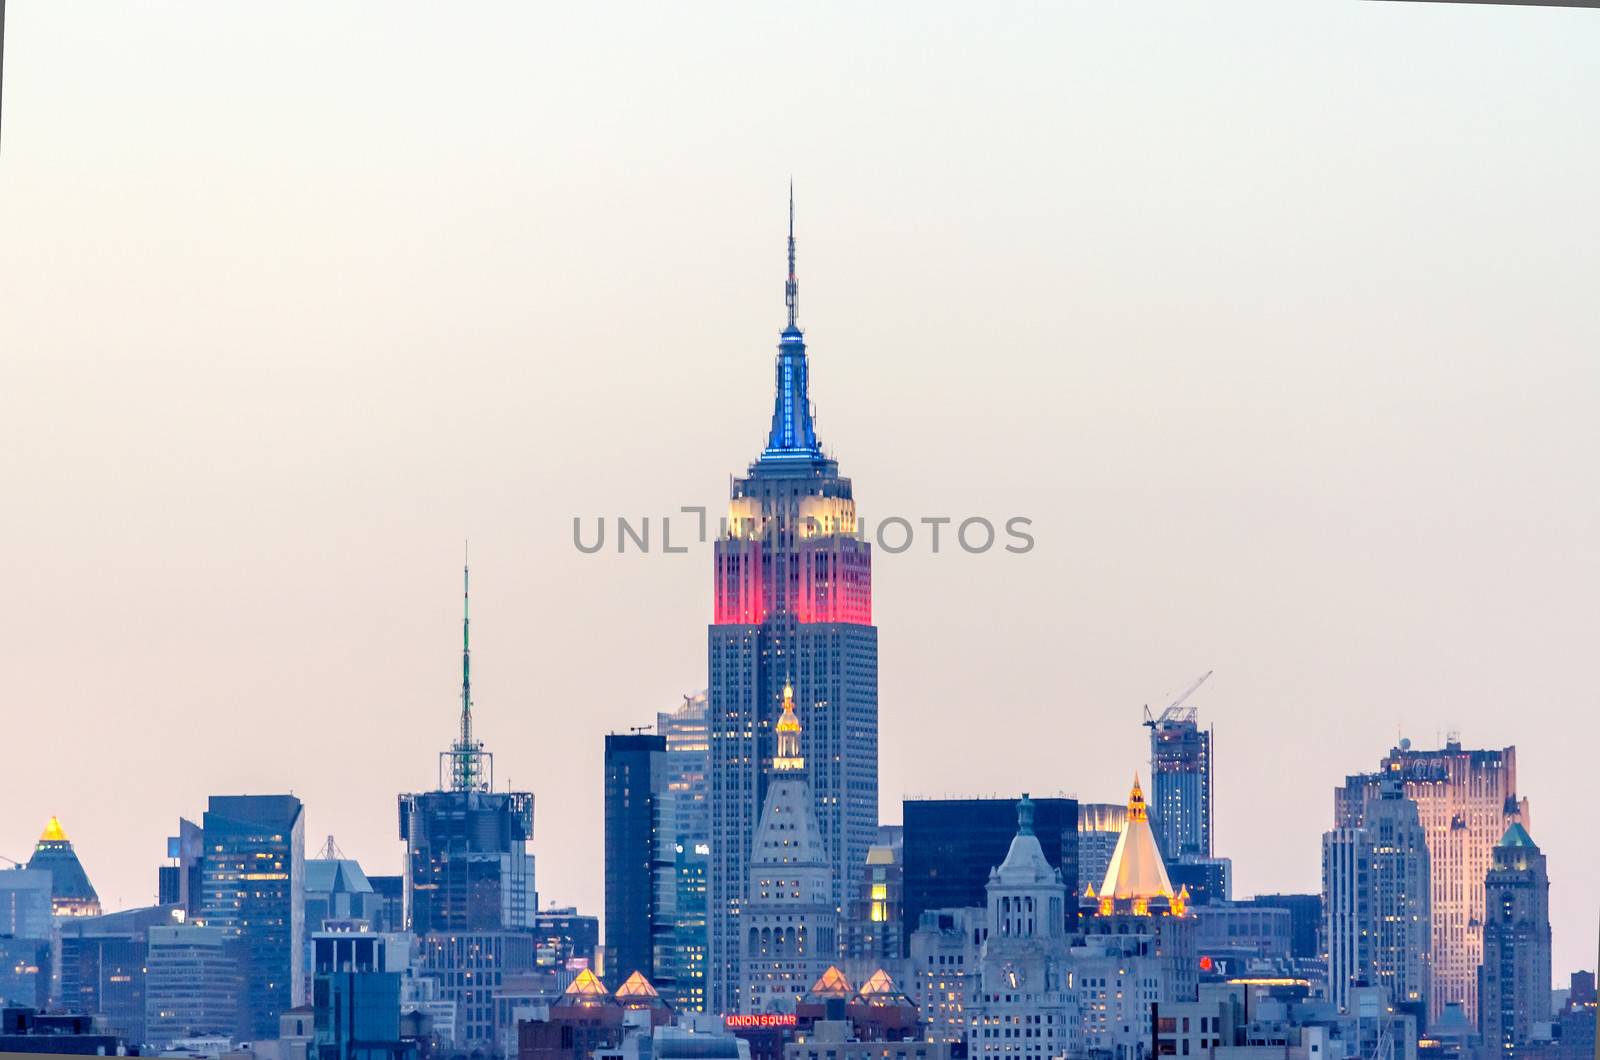 The Empire State Building, New York City by marcorubino